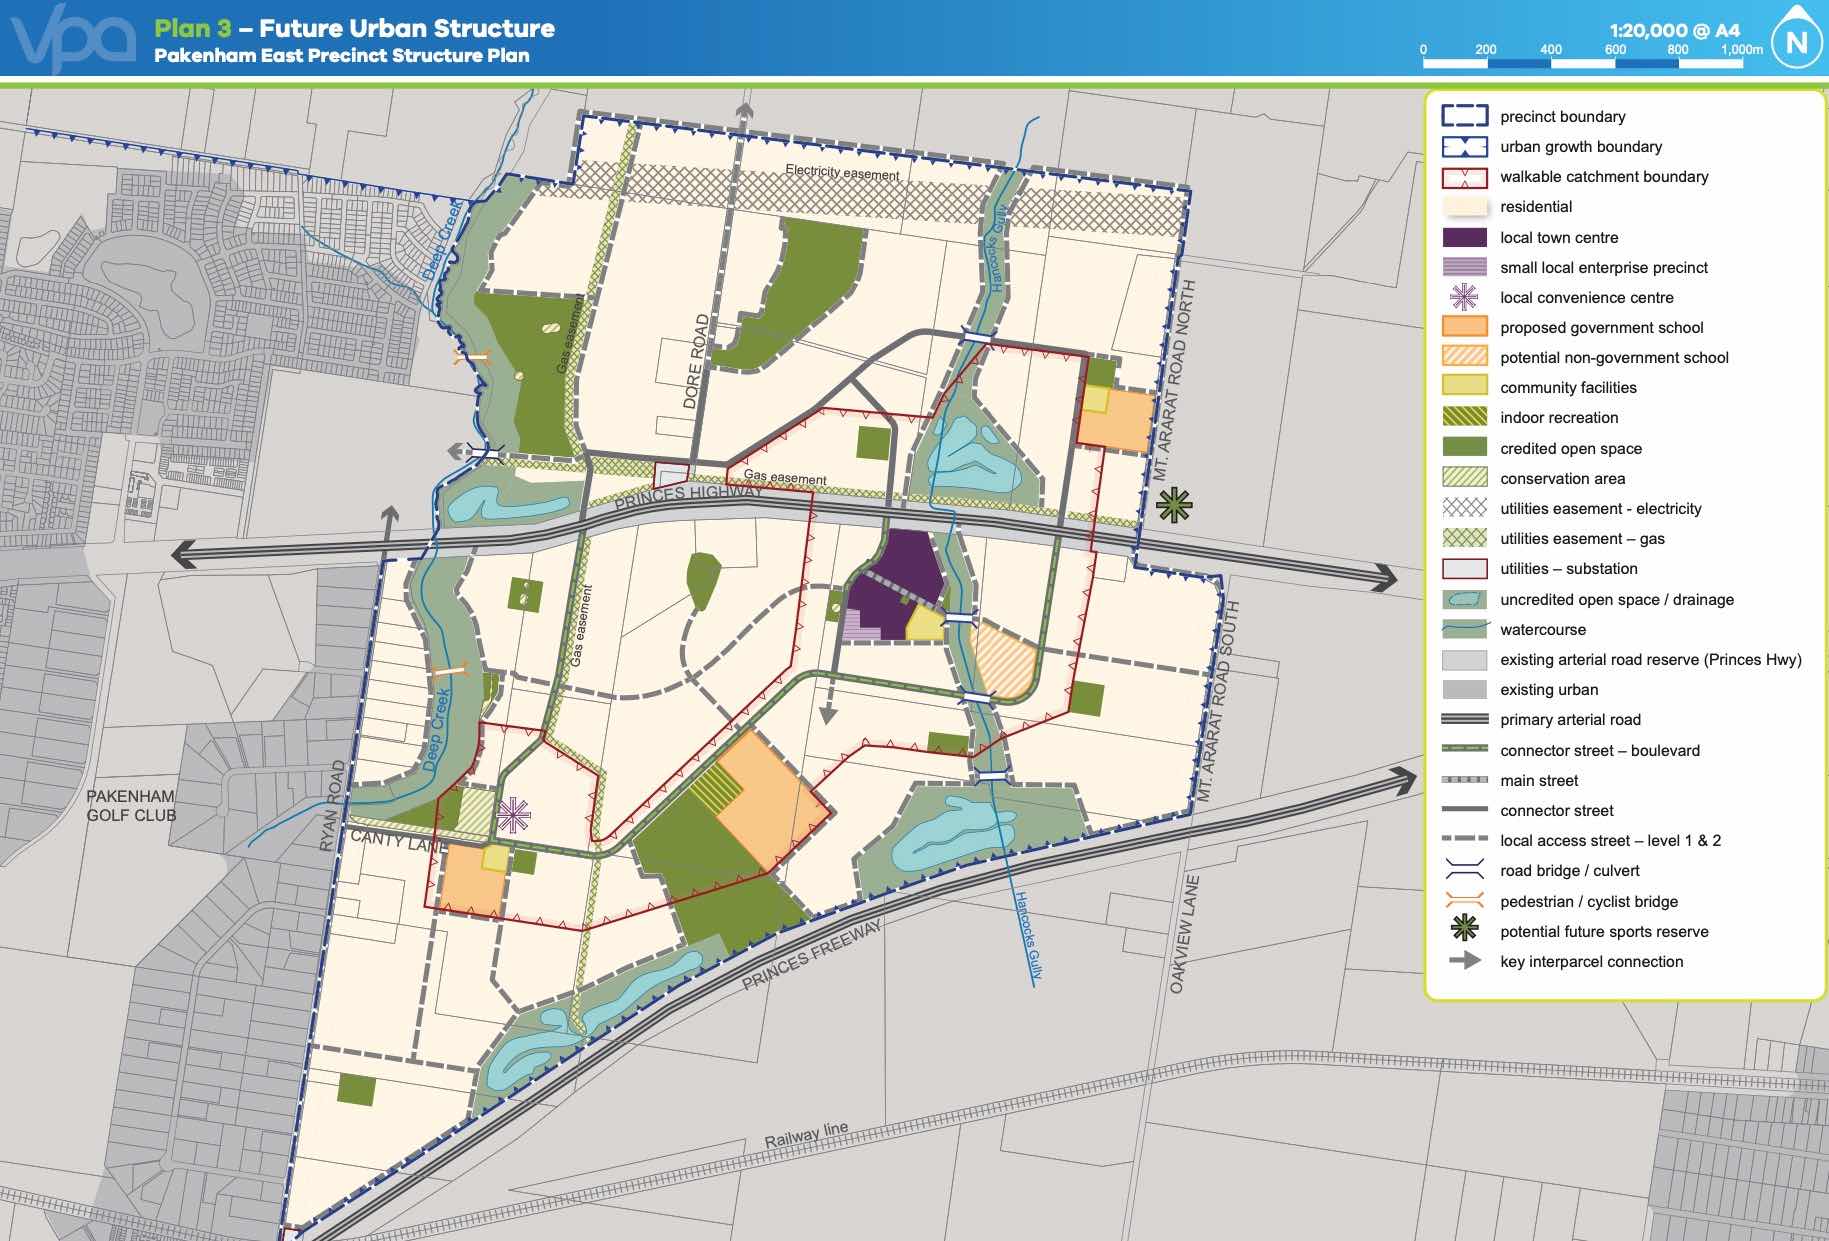 Pakenham East Precinct Structure Plan – Future Urban Structure